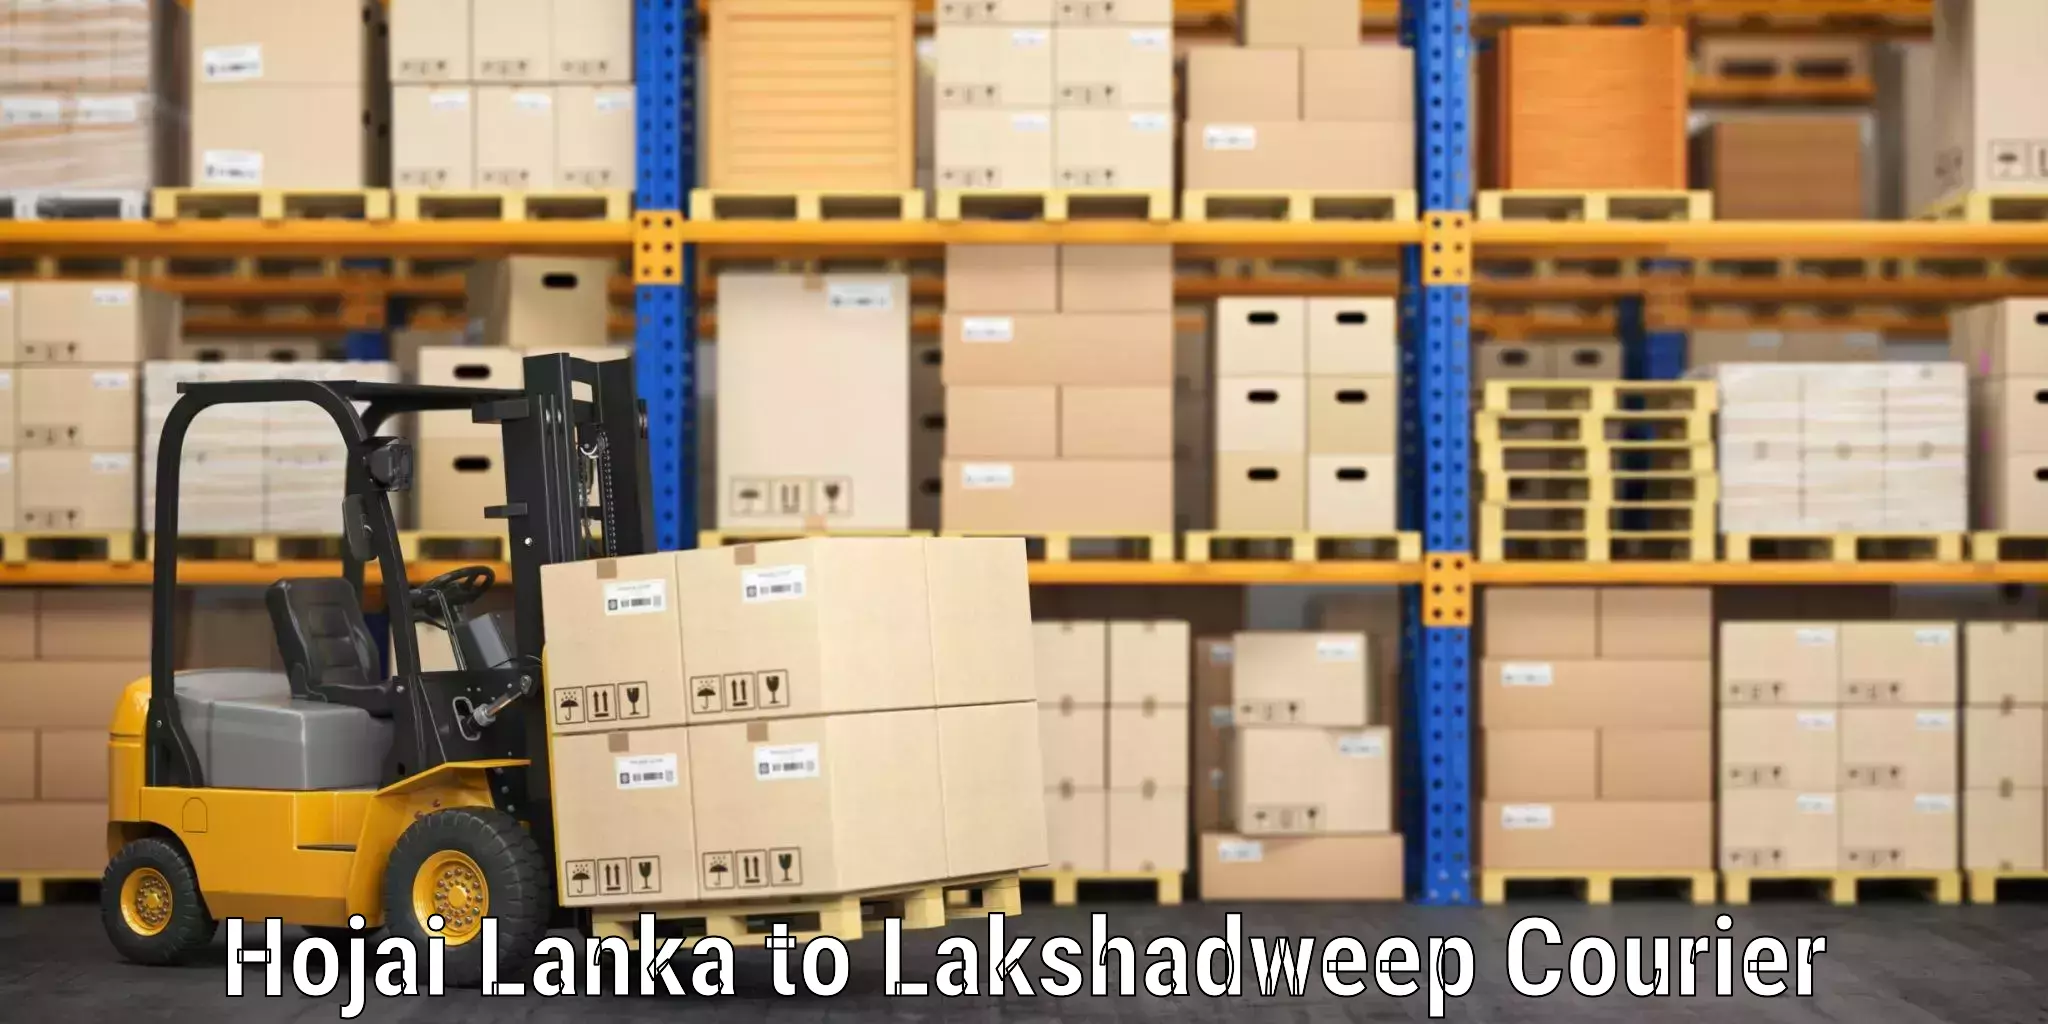 Luggage transport guidelines Hojai Lanka to Lakshadweep